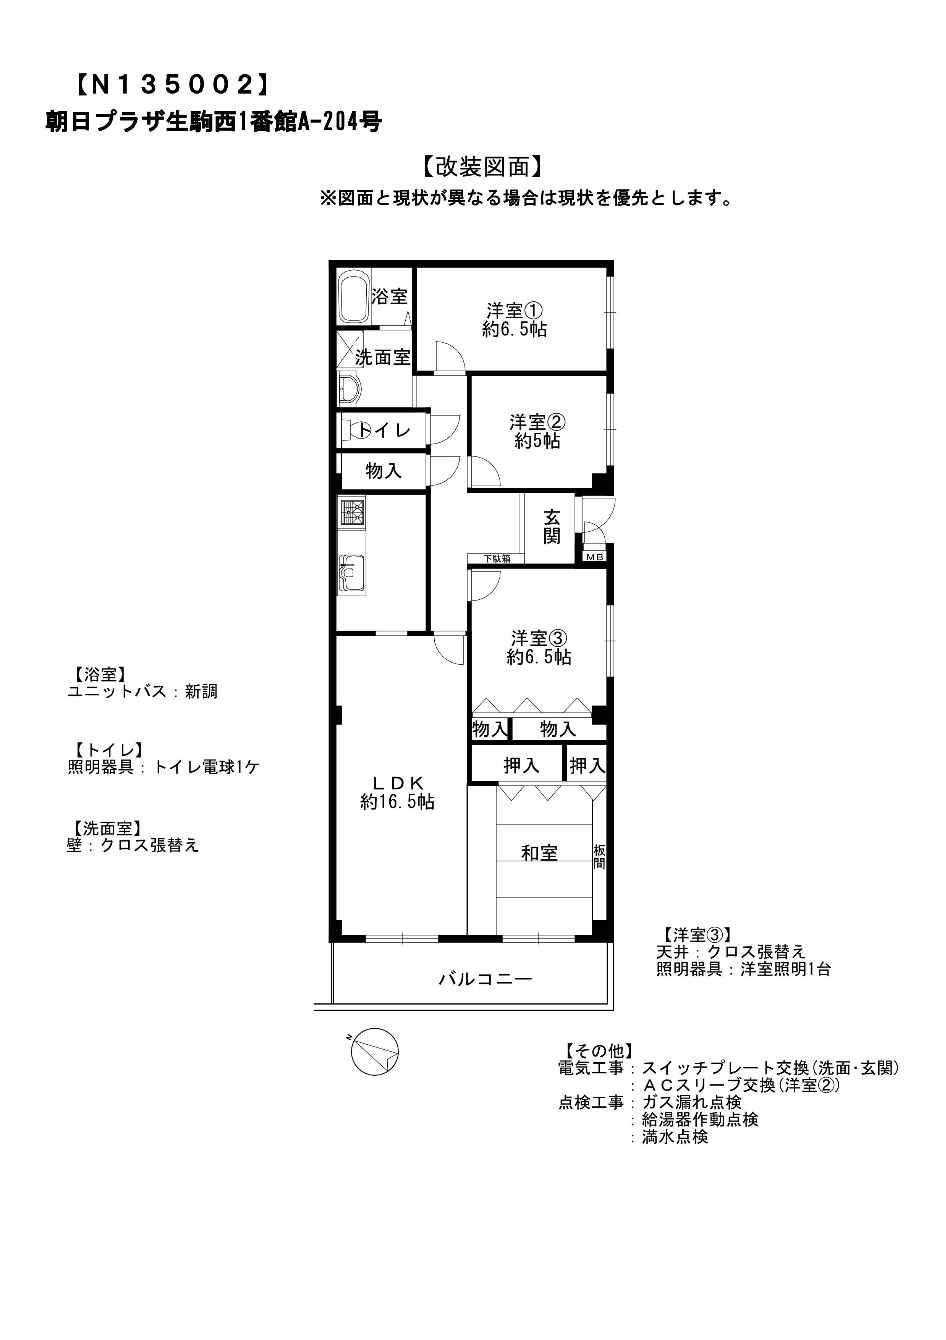 Floor plan. 4LDK, Price 9.8 million yen, Occupied area 92.25 sq m , Balcony area 9.3 sq m